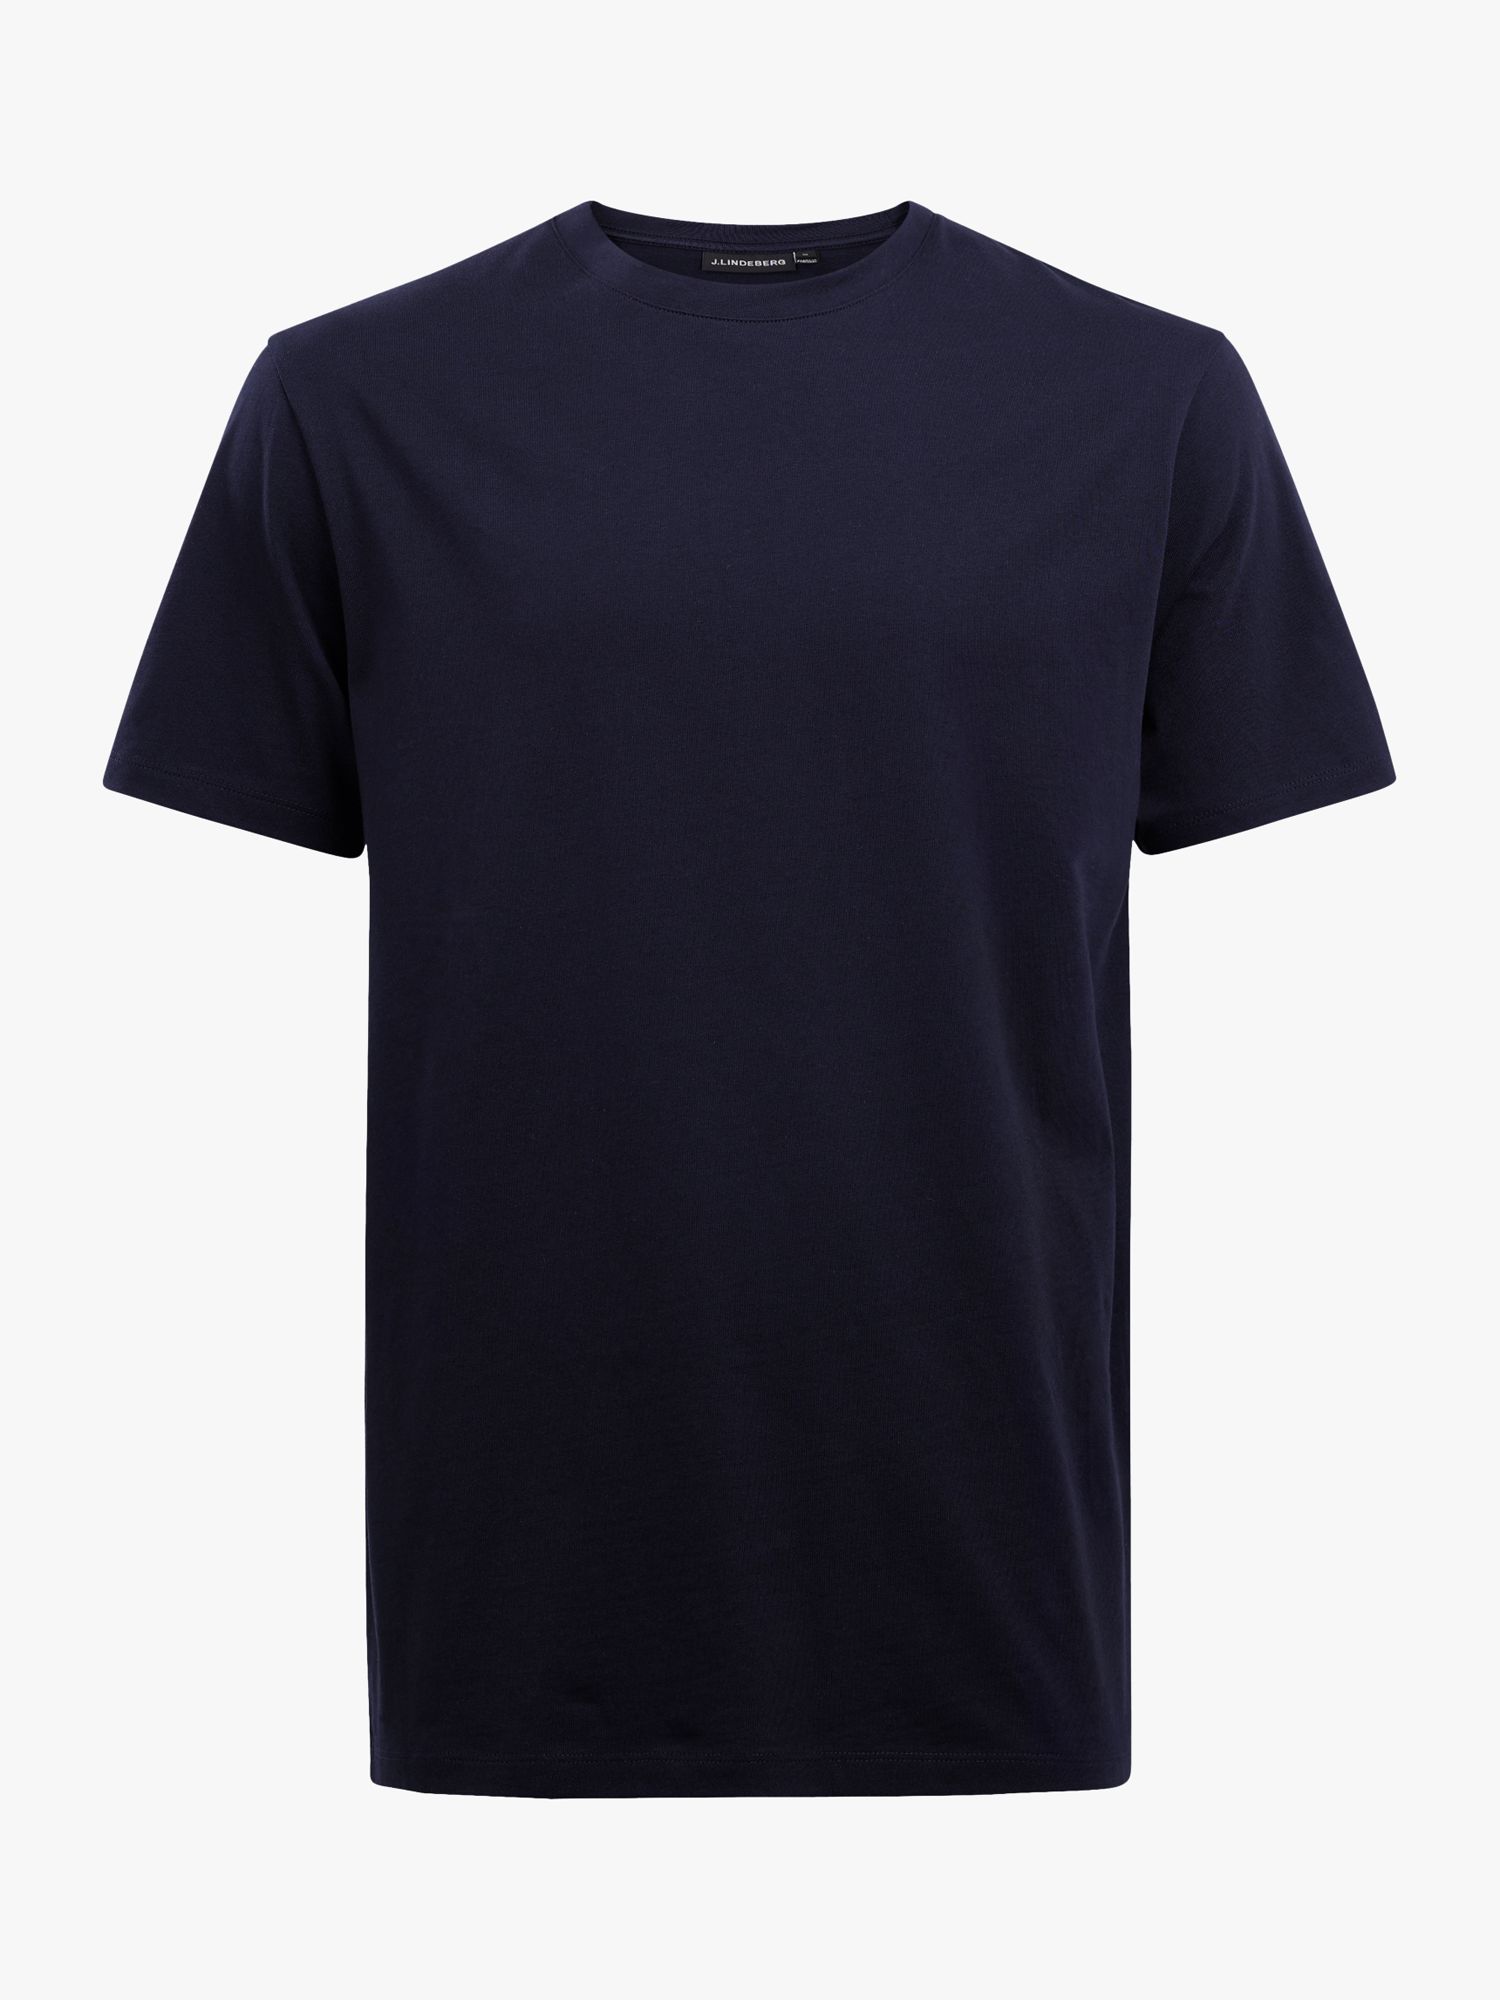 J.Lindeberg Sid Basic T-Shirt, Jl Navy, S